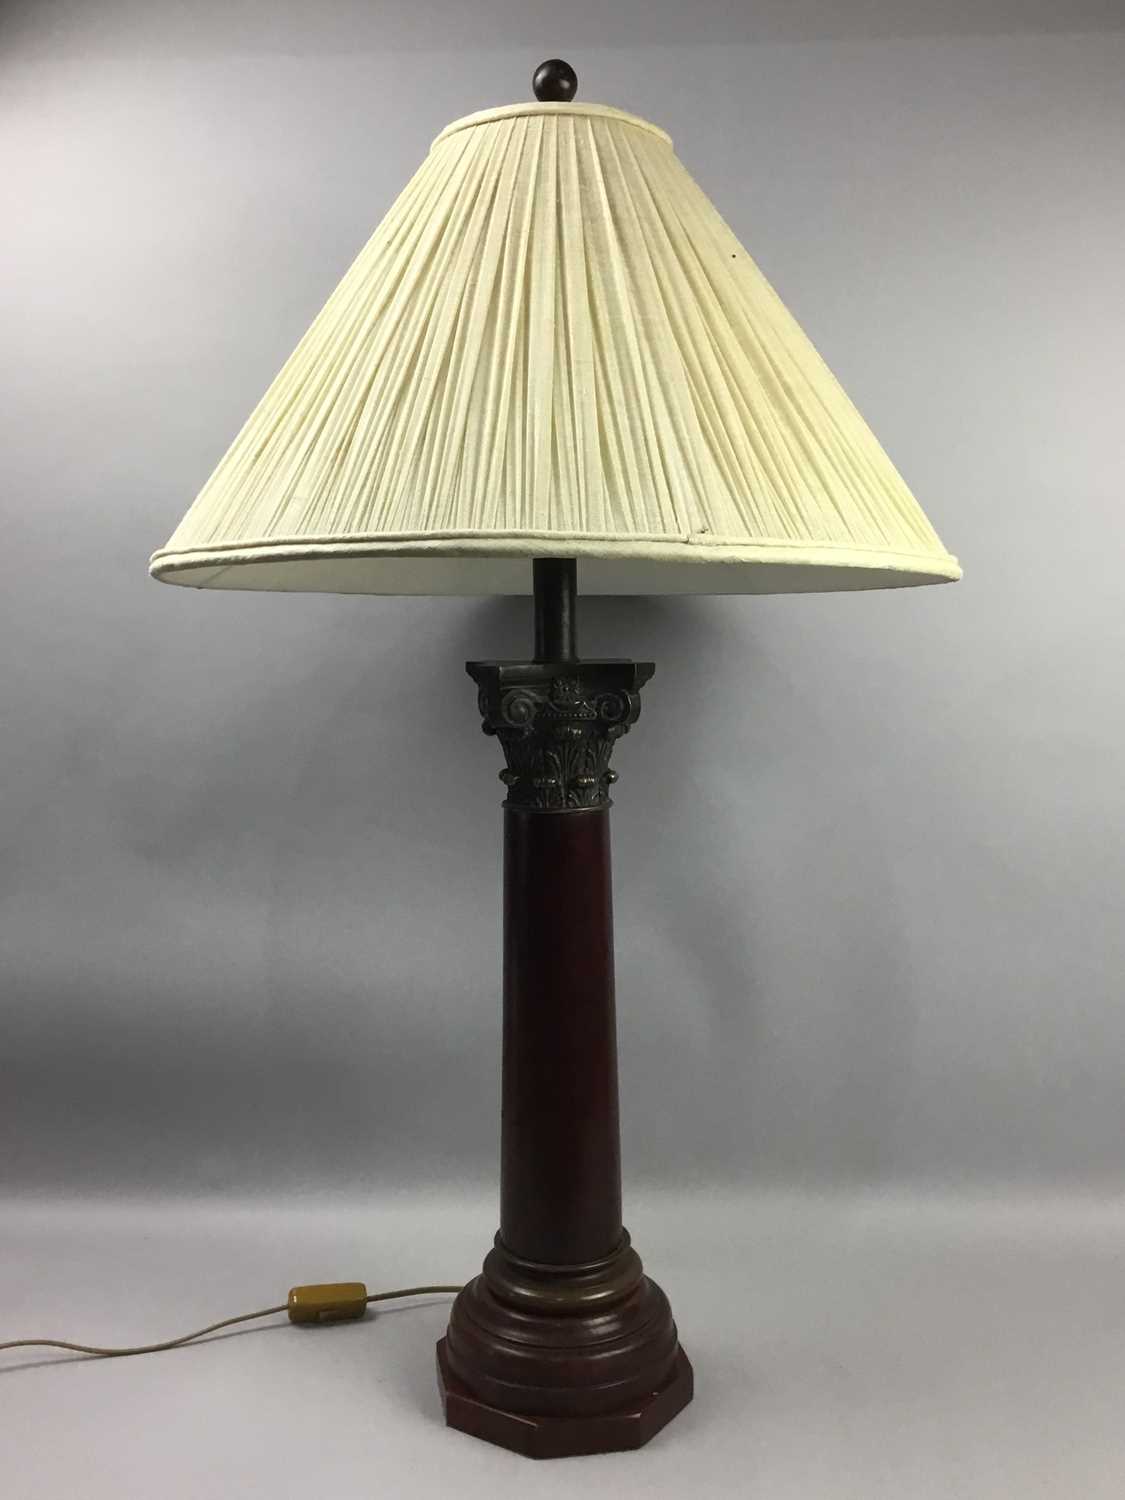 Lot 712 - A REPRODUCTION CORINTHIAN COLUMN TABLE LAMP